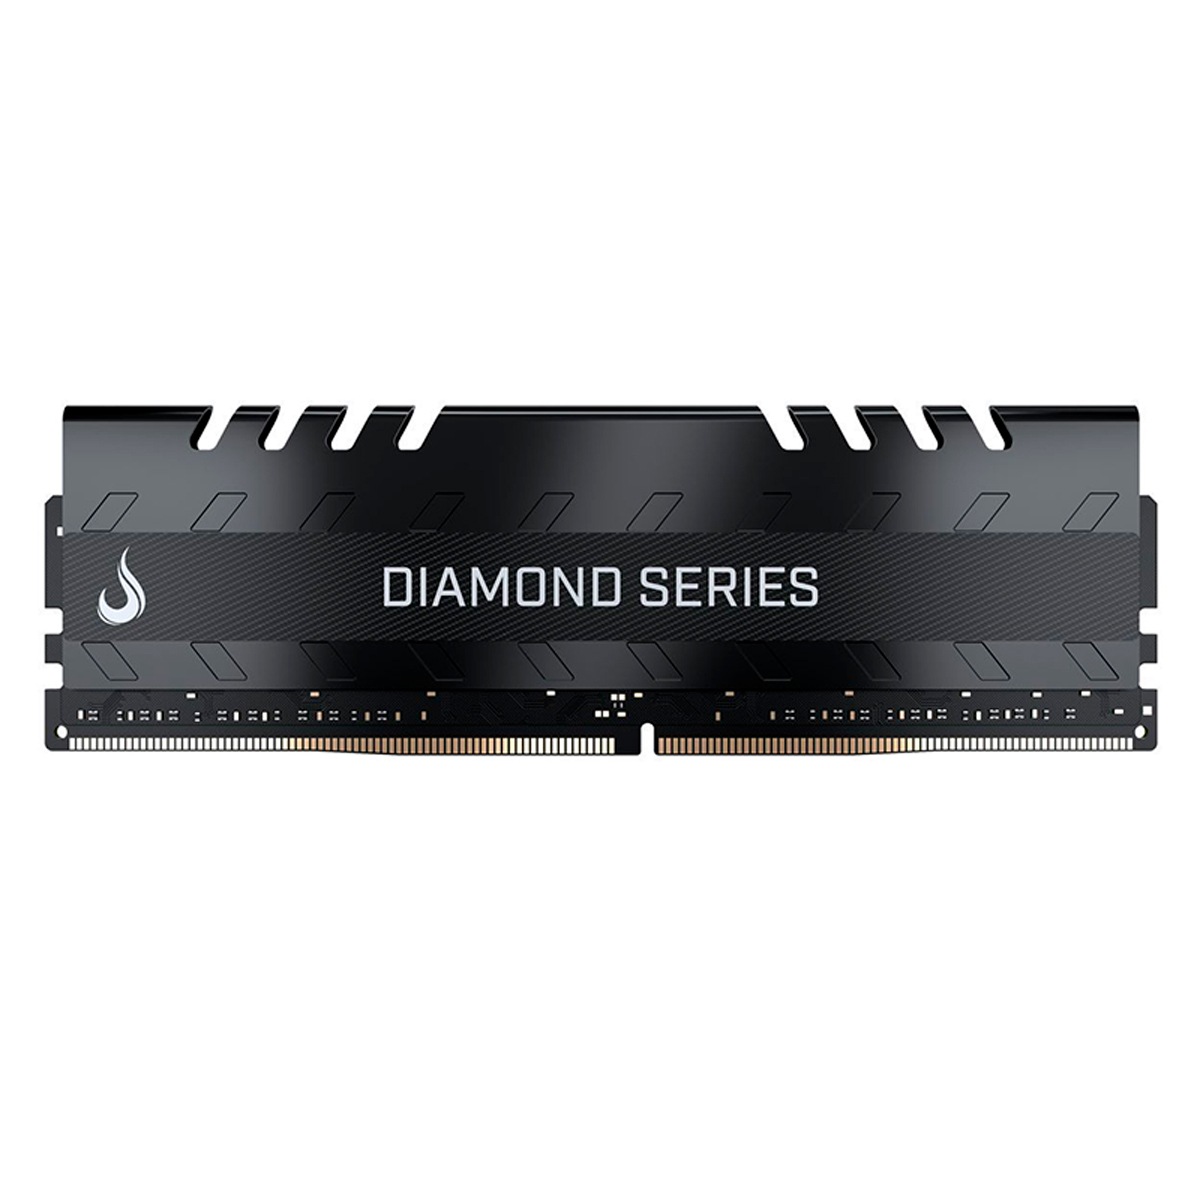 Memória 16GB DDR4 2400MHz Rise Mode Diamond - CL15 - com Dissipador - RM-D4-16GB-2400D